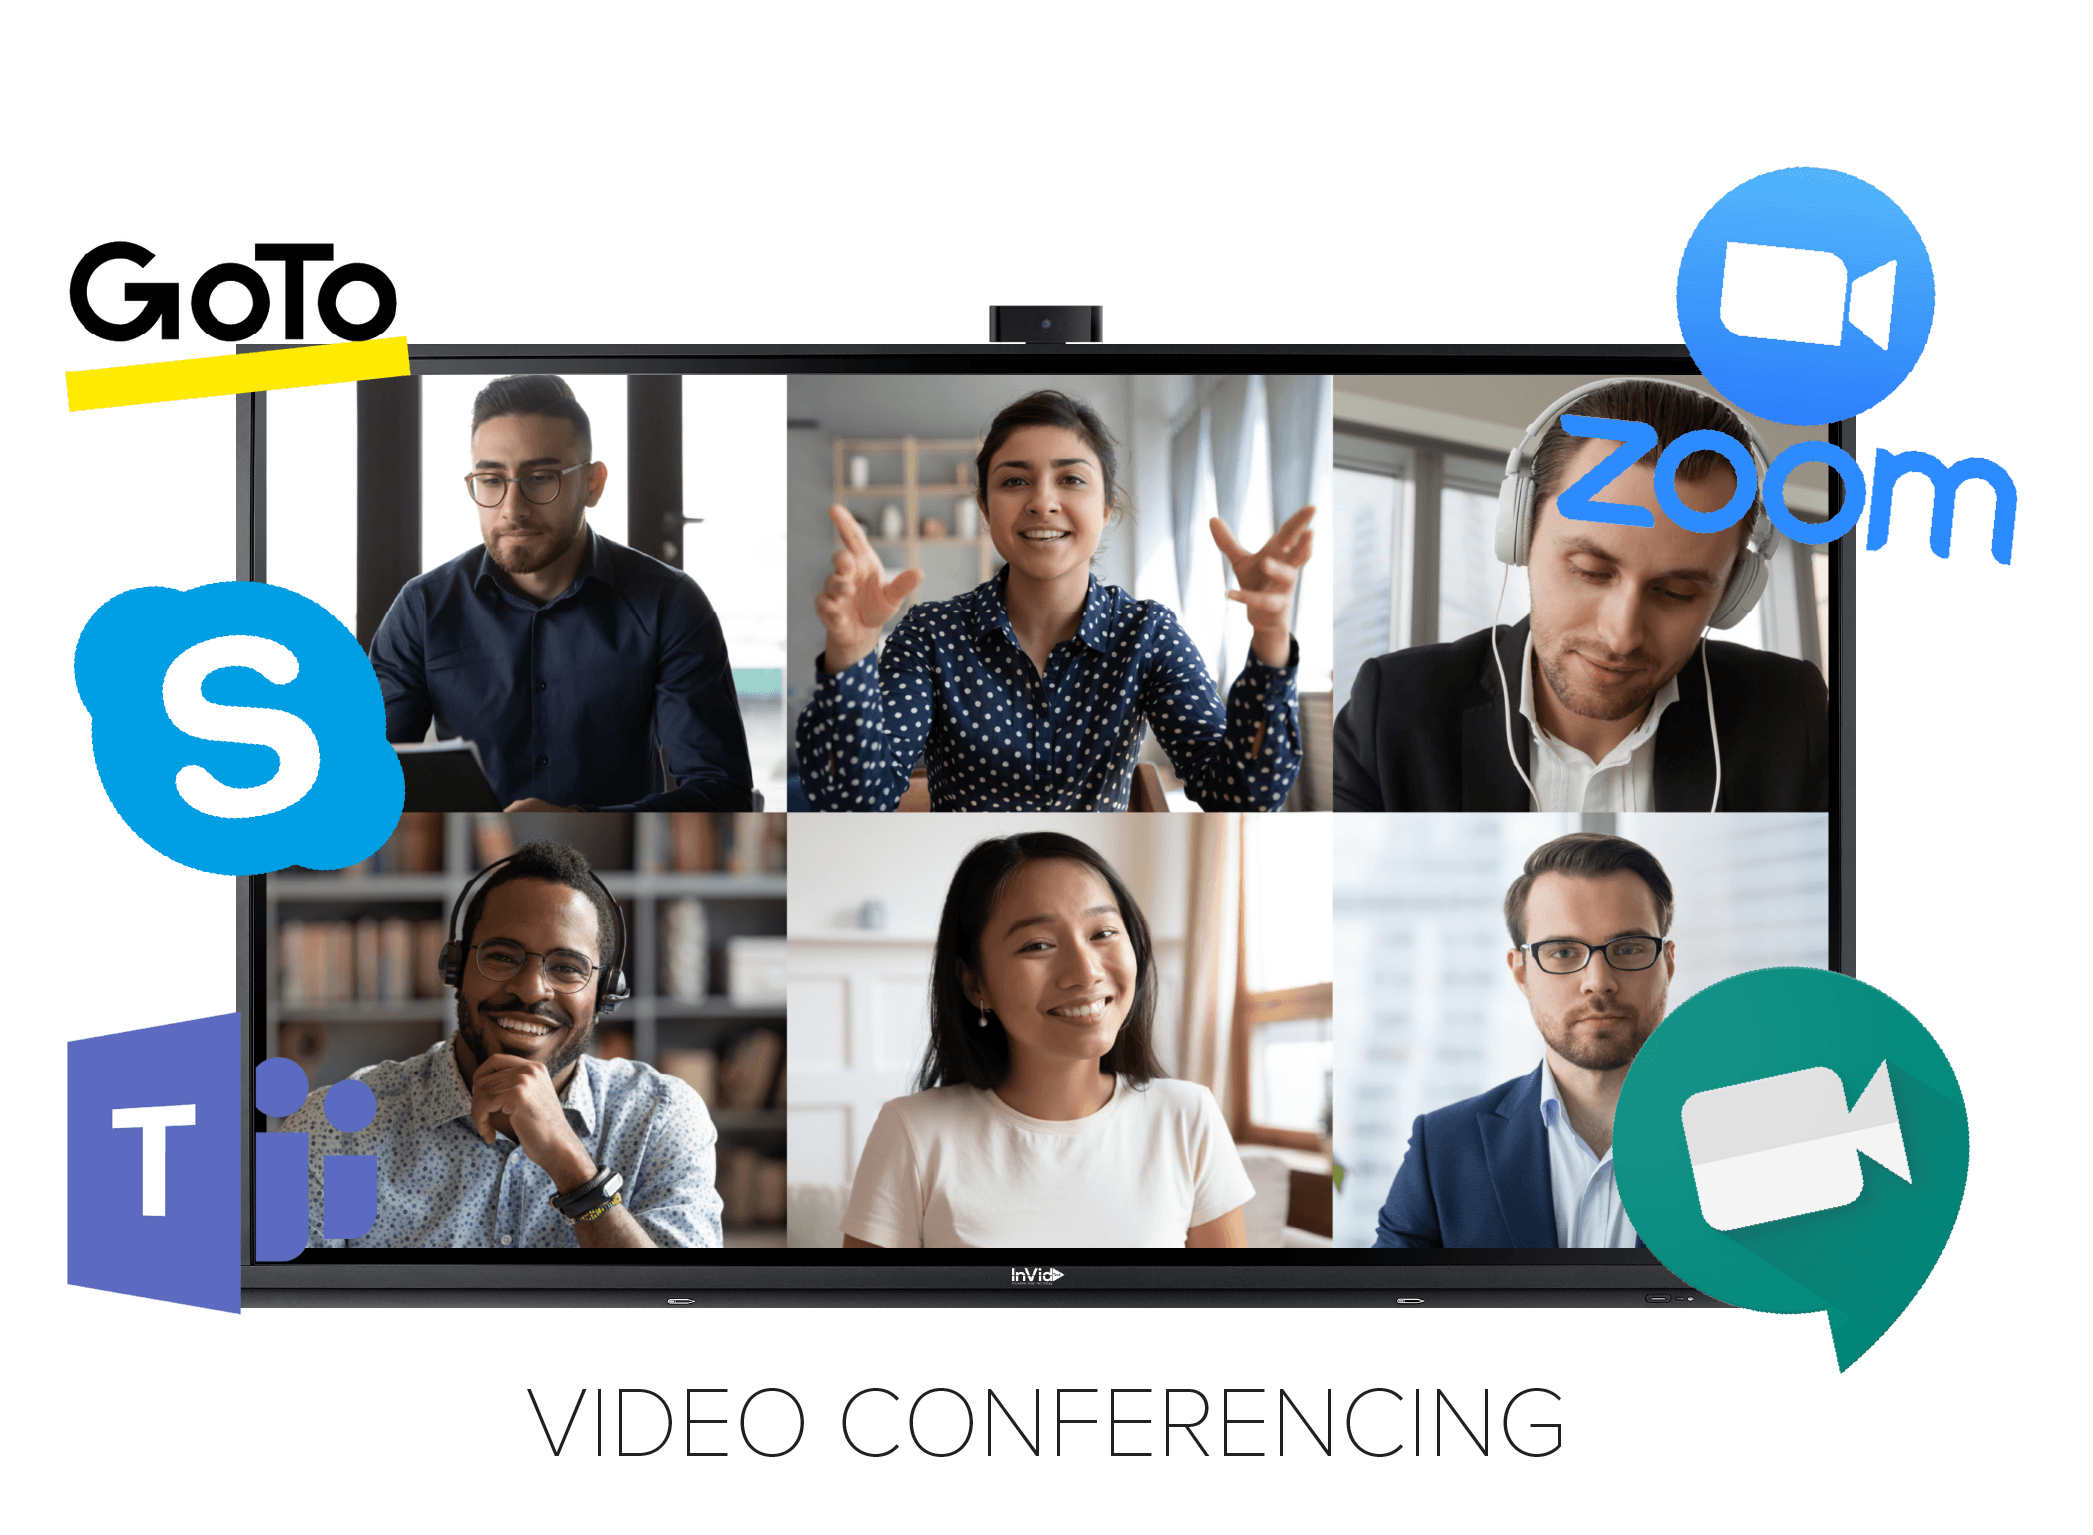 VideoConferencing_vs1.3